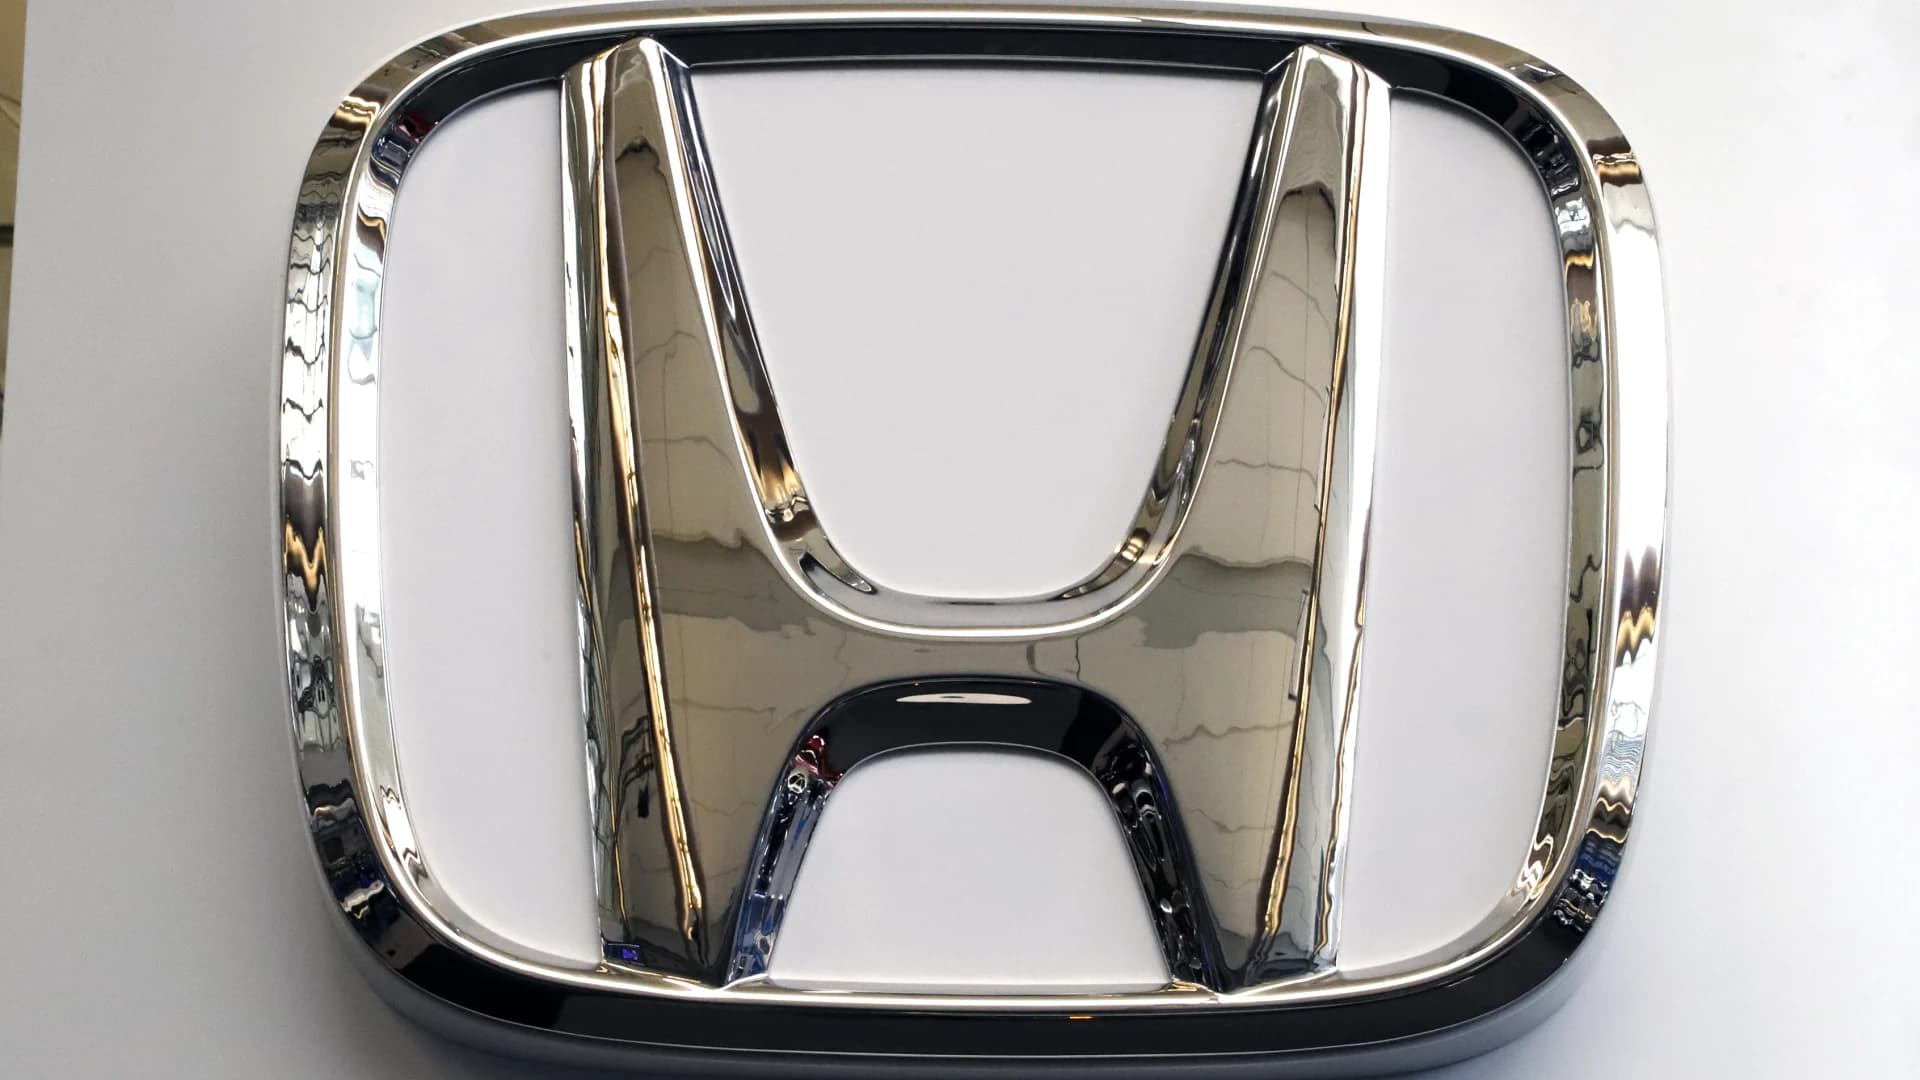 Honda recalling 500,000 vehicles to fix seat belt problem